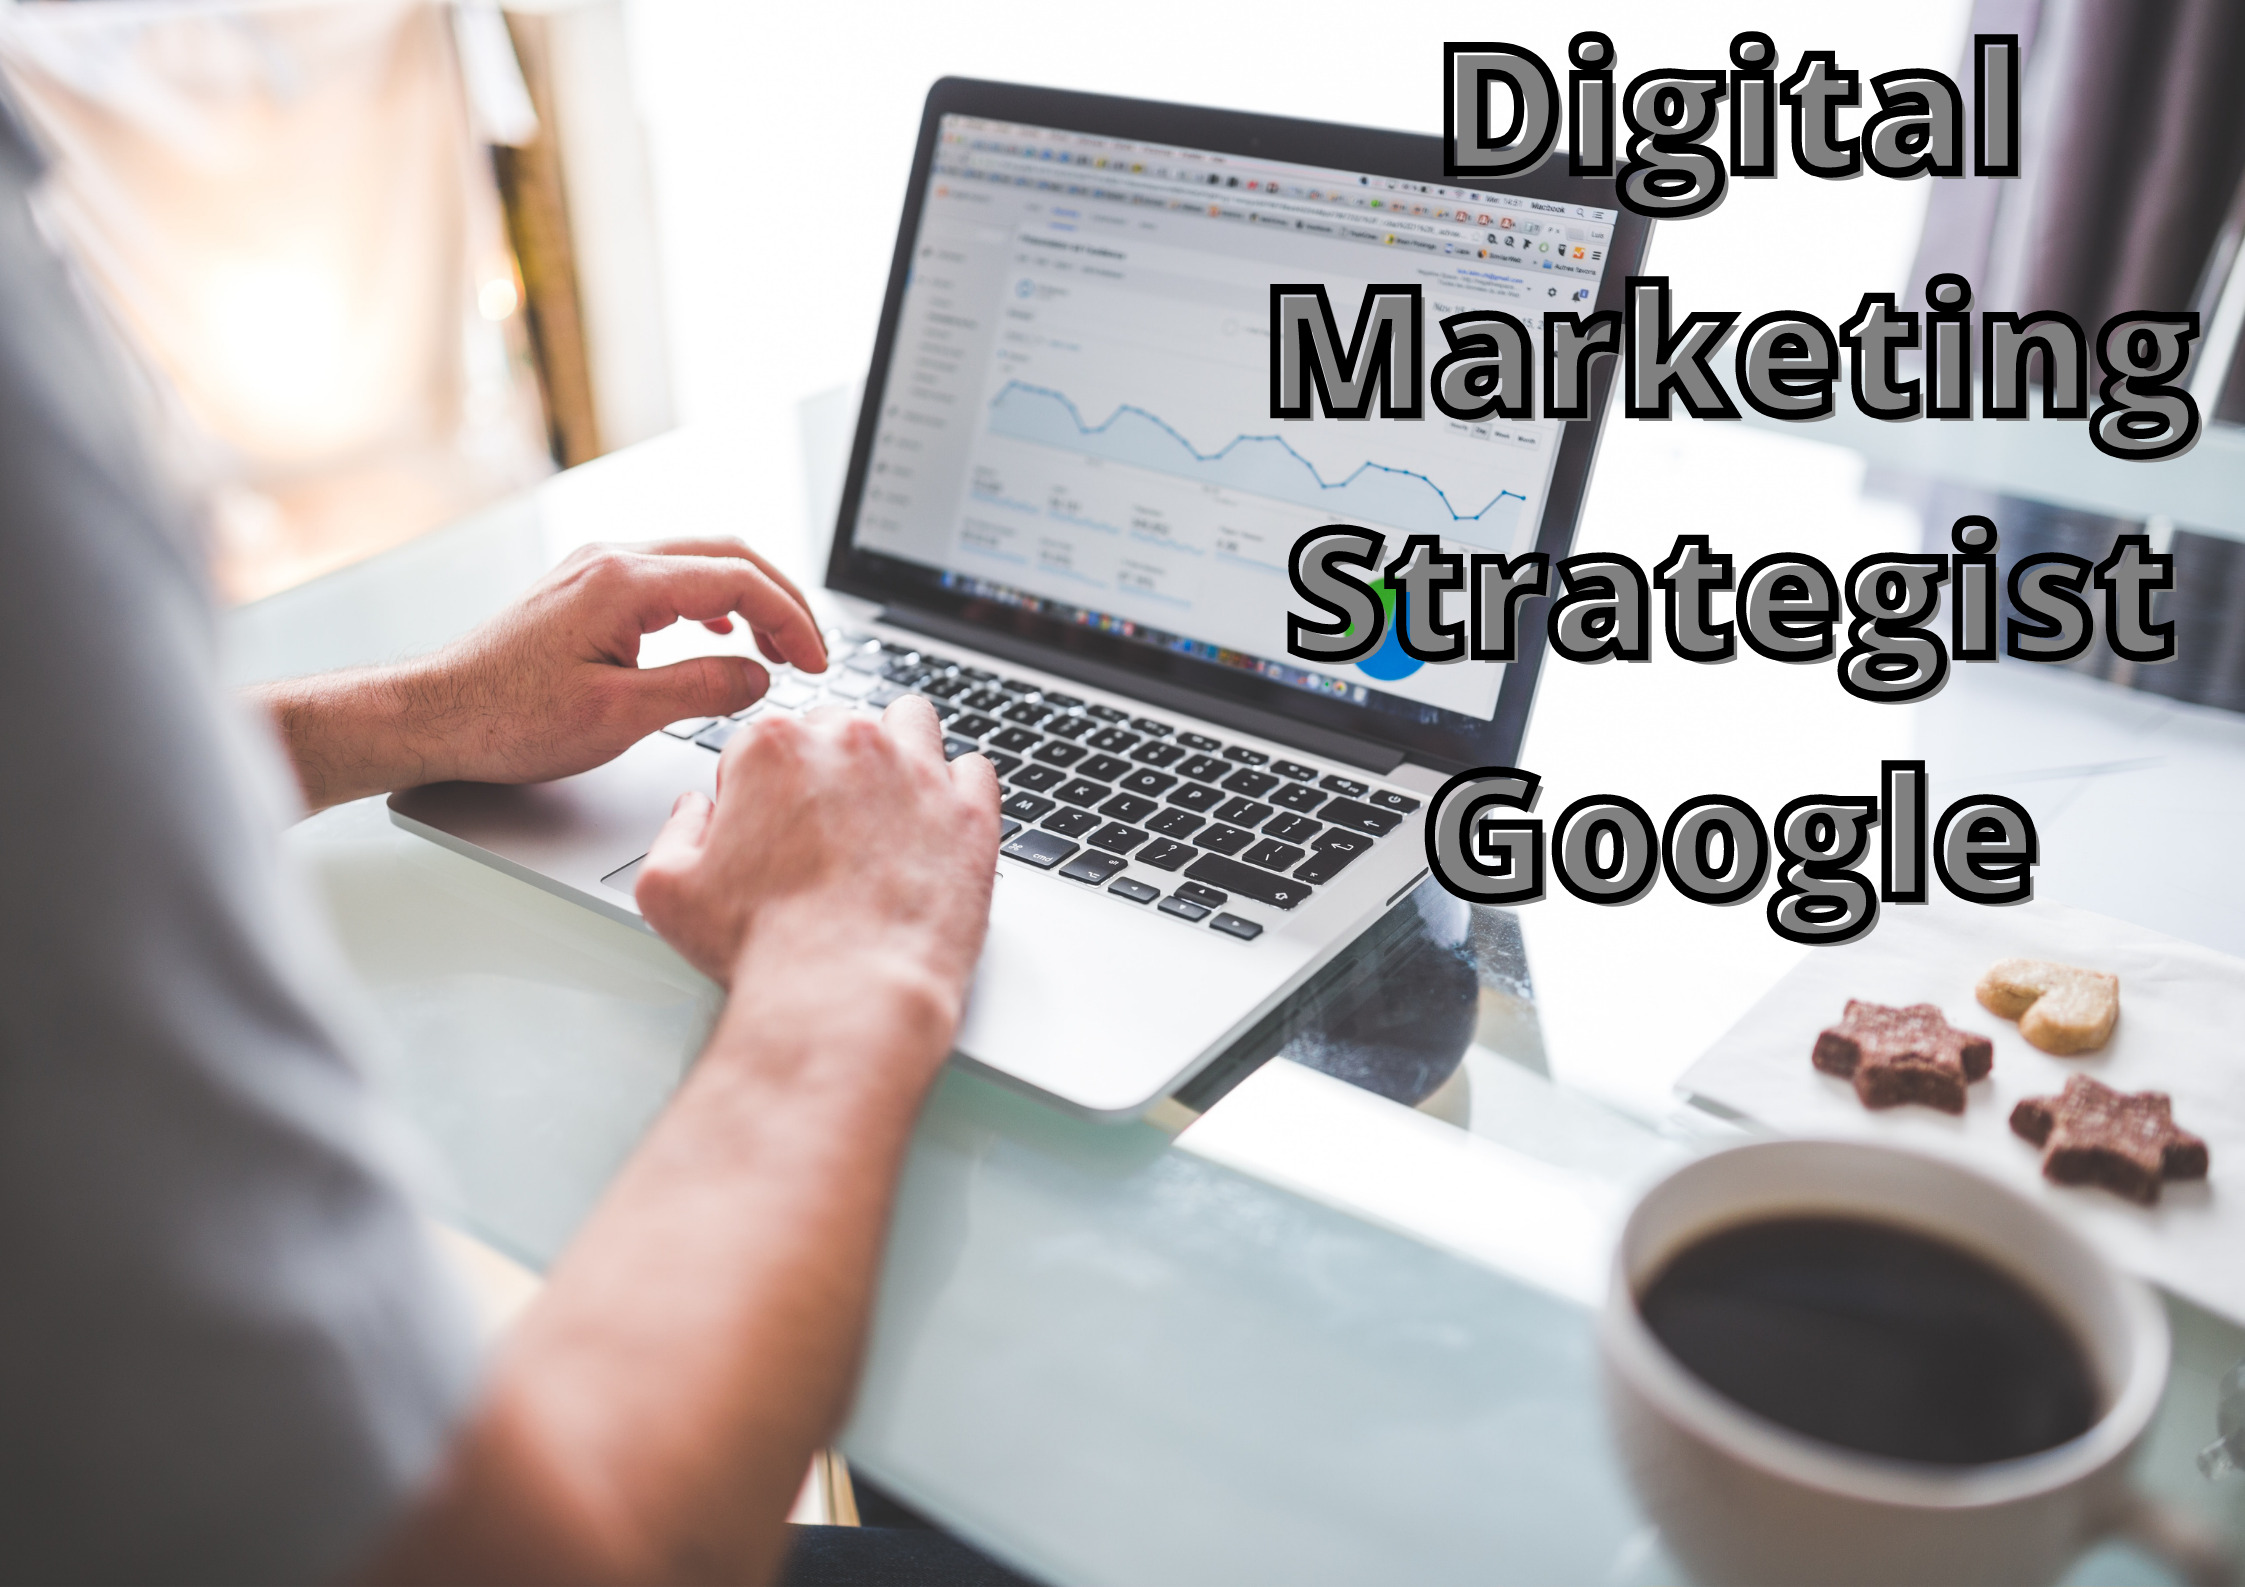 Digital Marketing Strategist Google